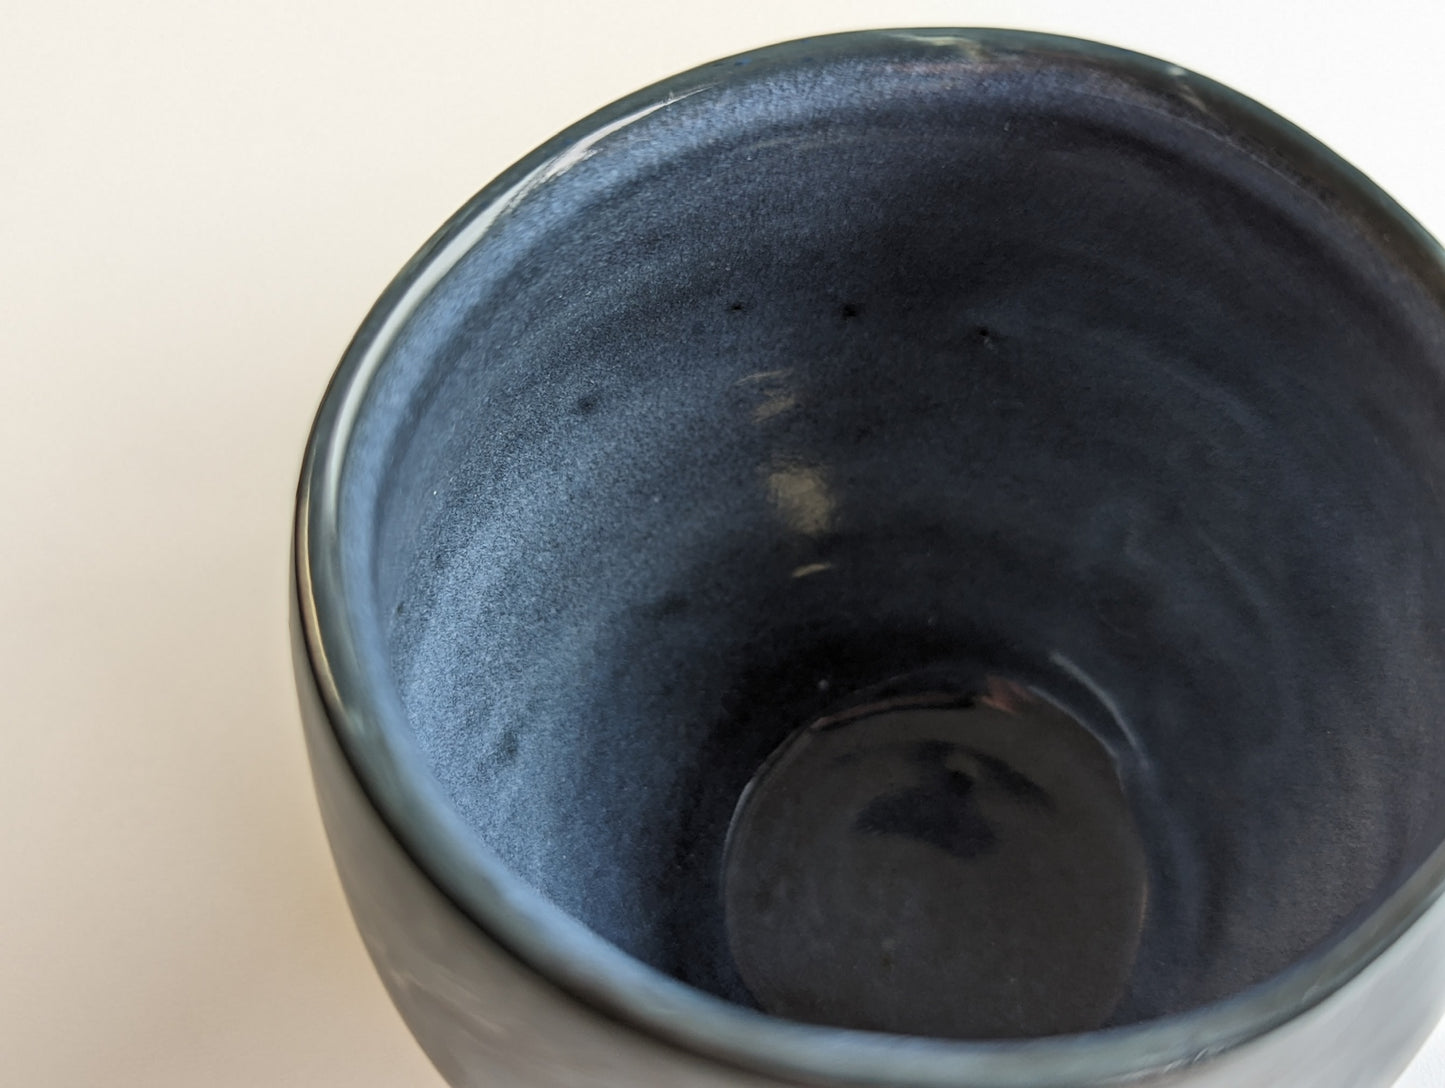 Teacup (yunomi), "Marble", Neptune 2 by Hitofusa no budō, 180ml